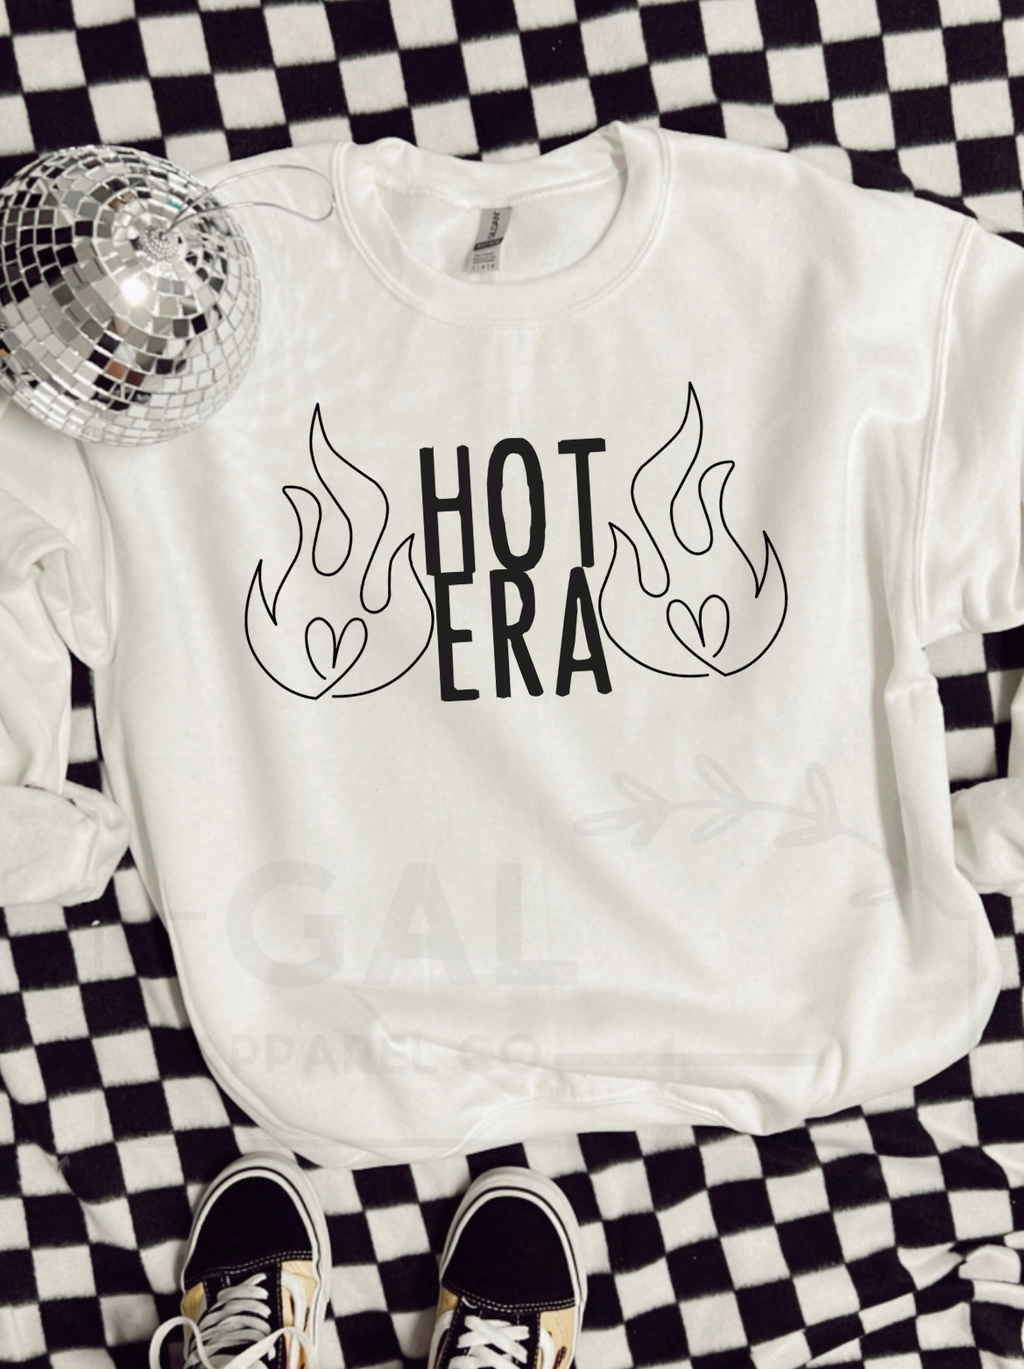 Hot era simple design tee or sweatshirt